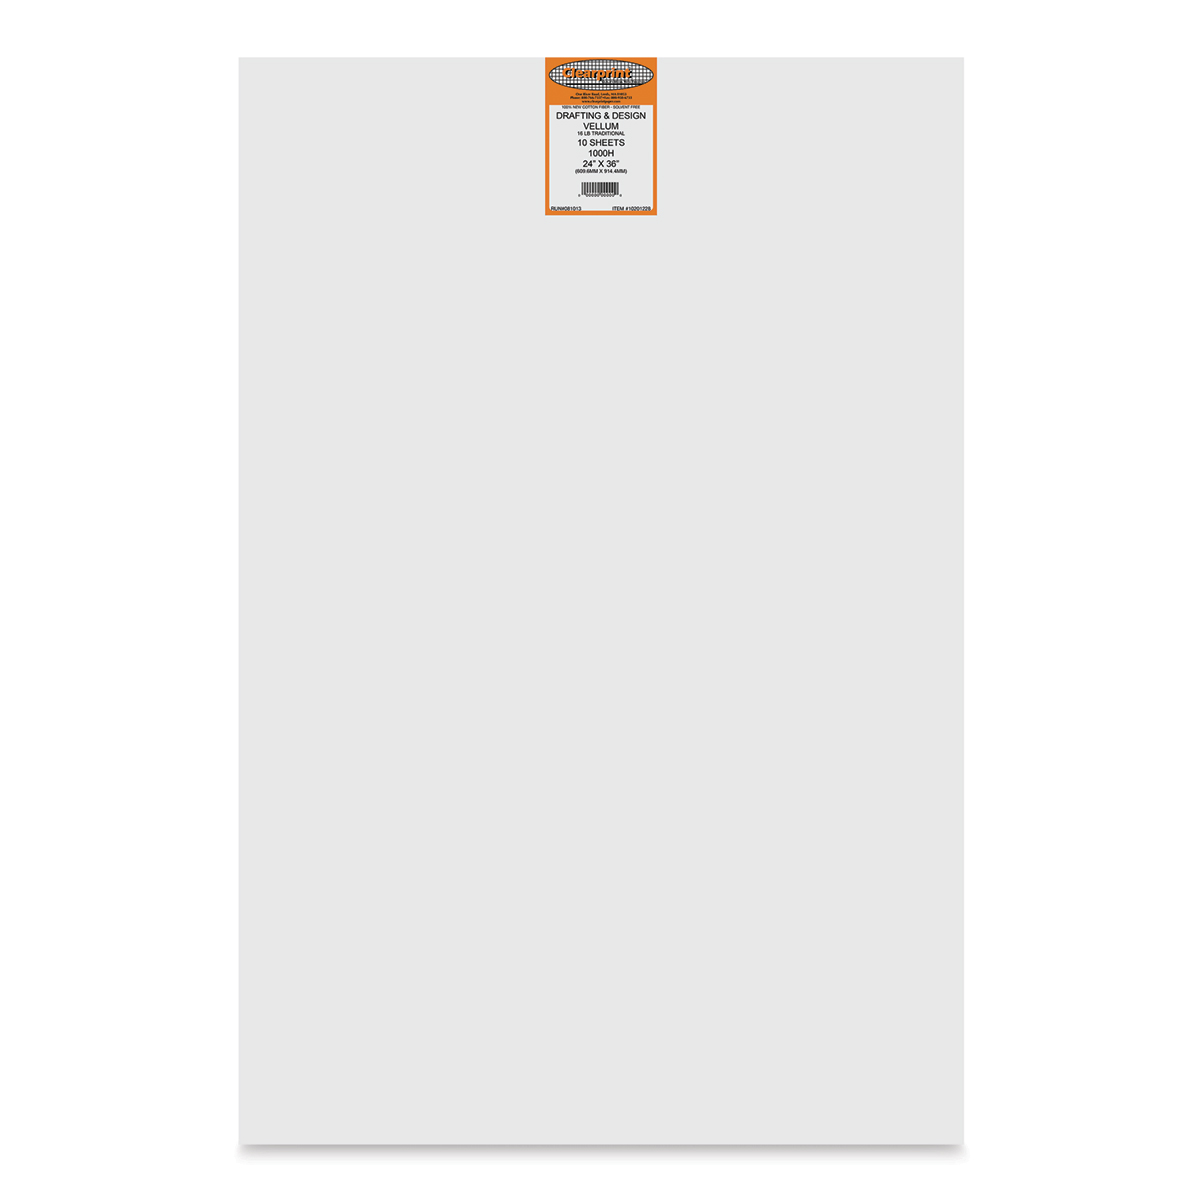 Clearprint Design Vellum Paper 16lb White 18 x 24 50 Sheets/Pad